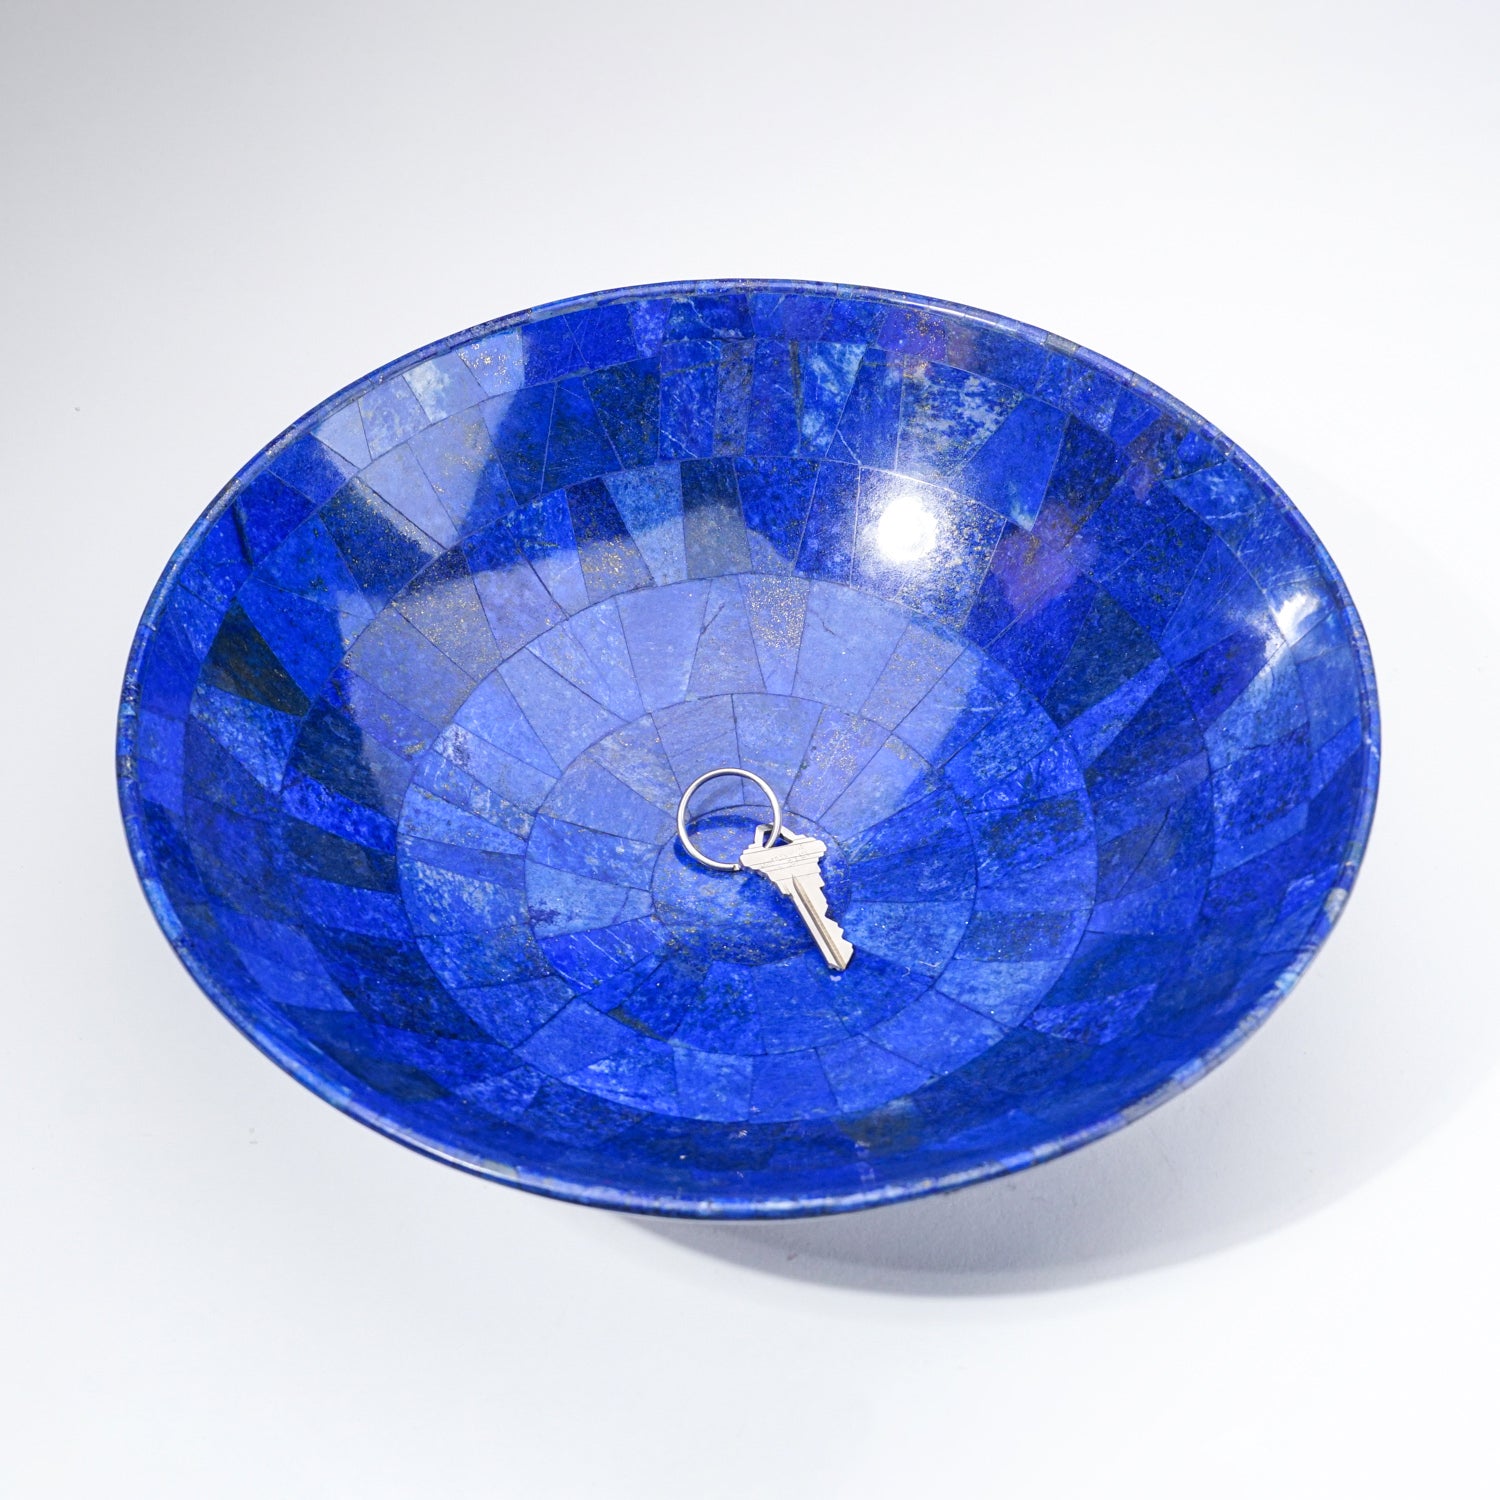 Genuine Polished Lapis Lazuli Bowl (2.6 lbs)